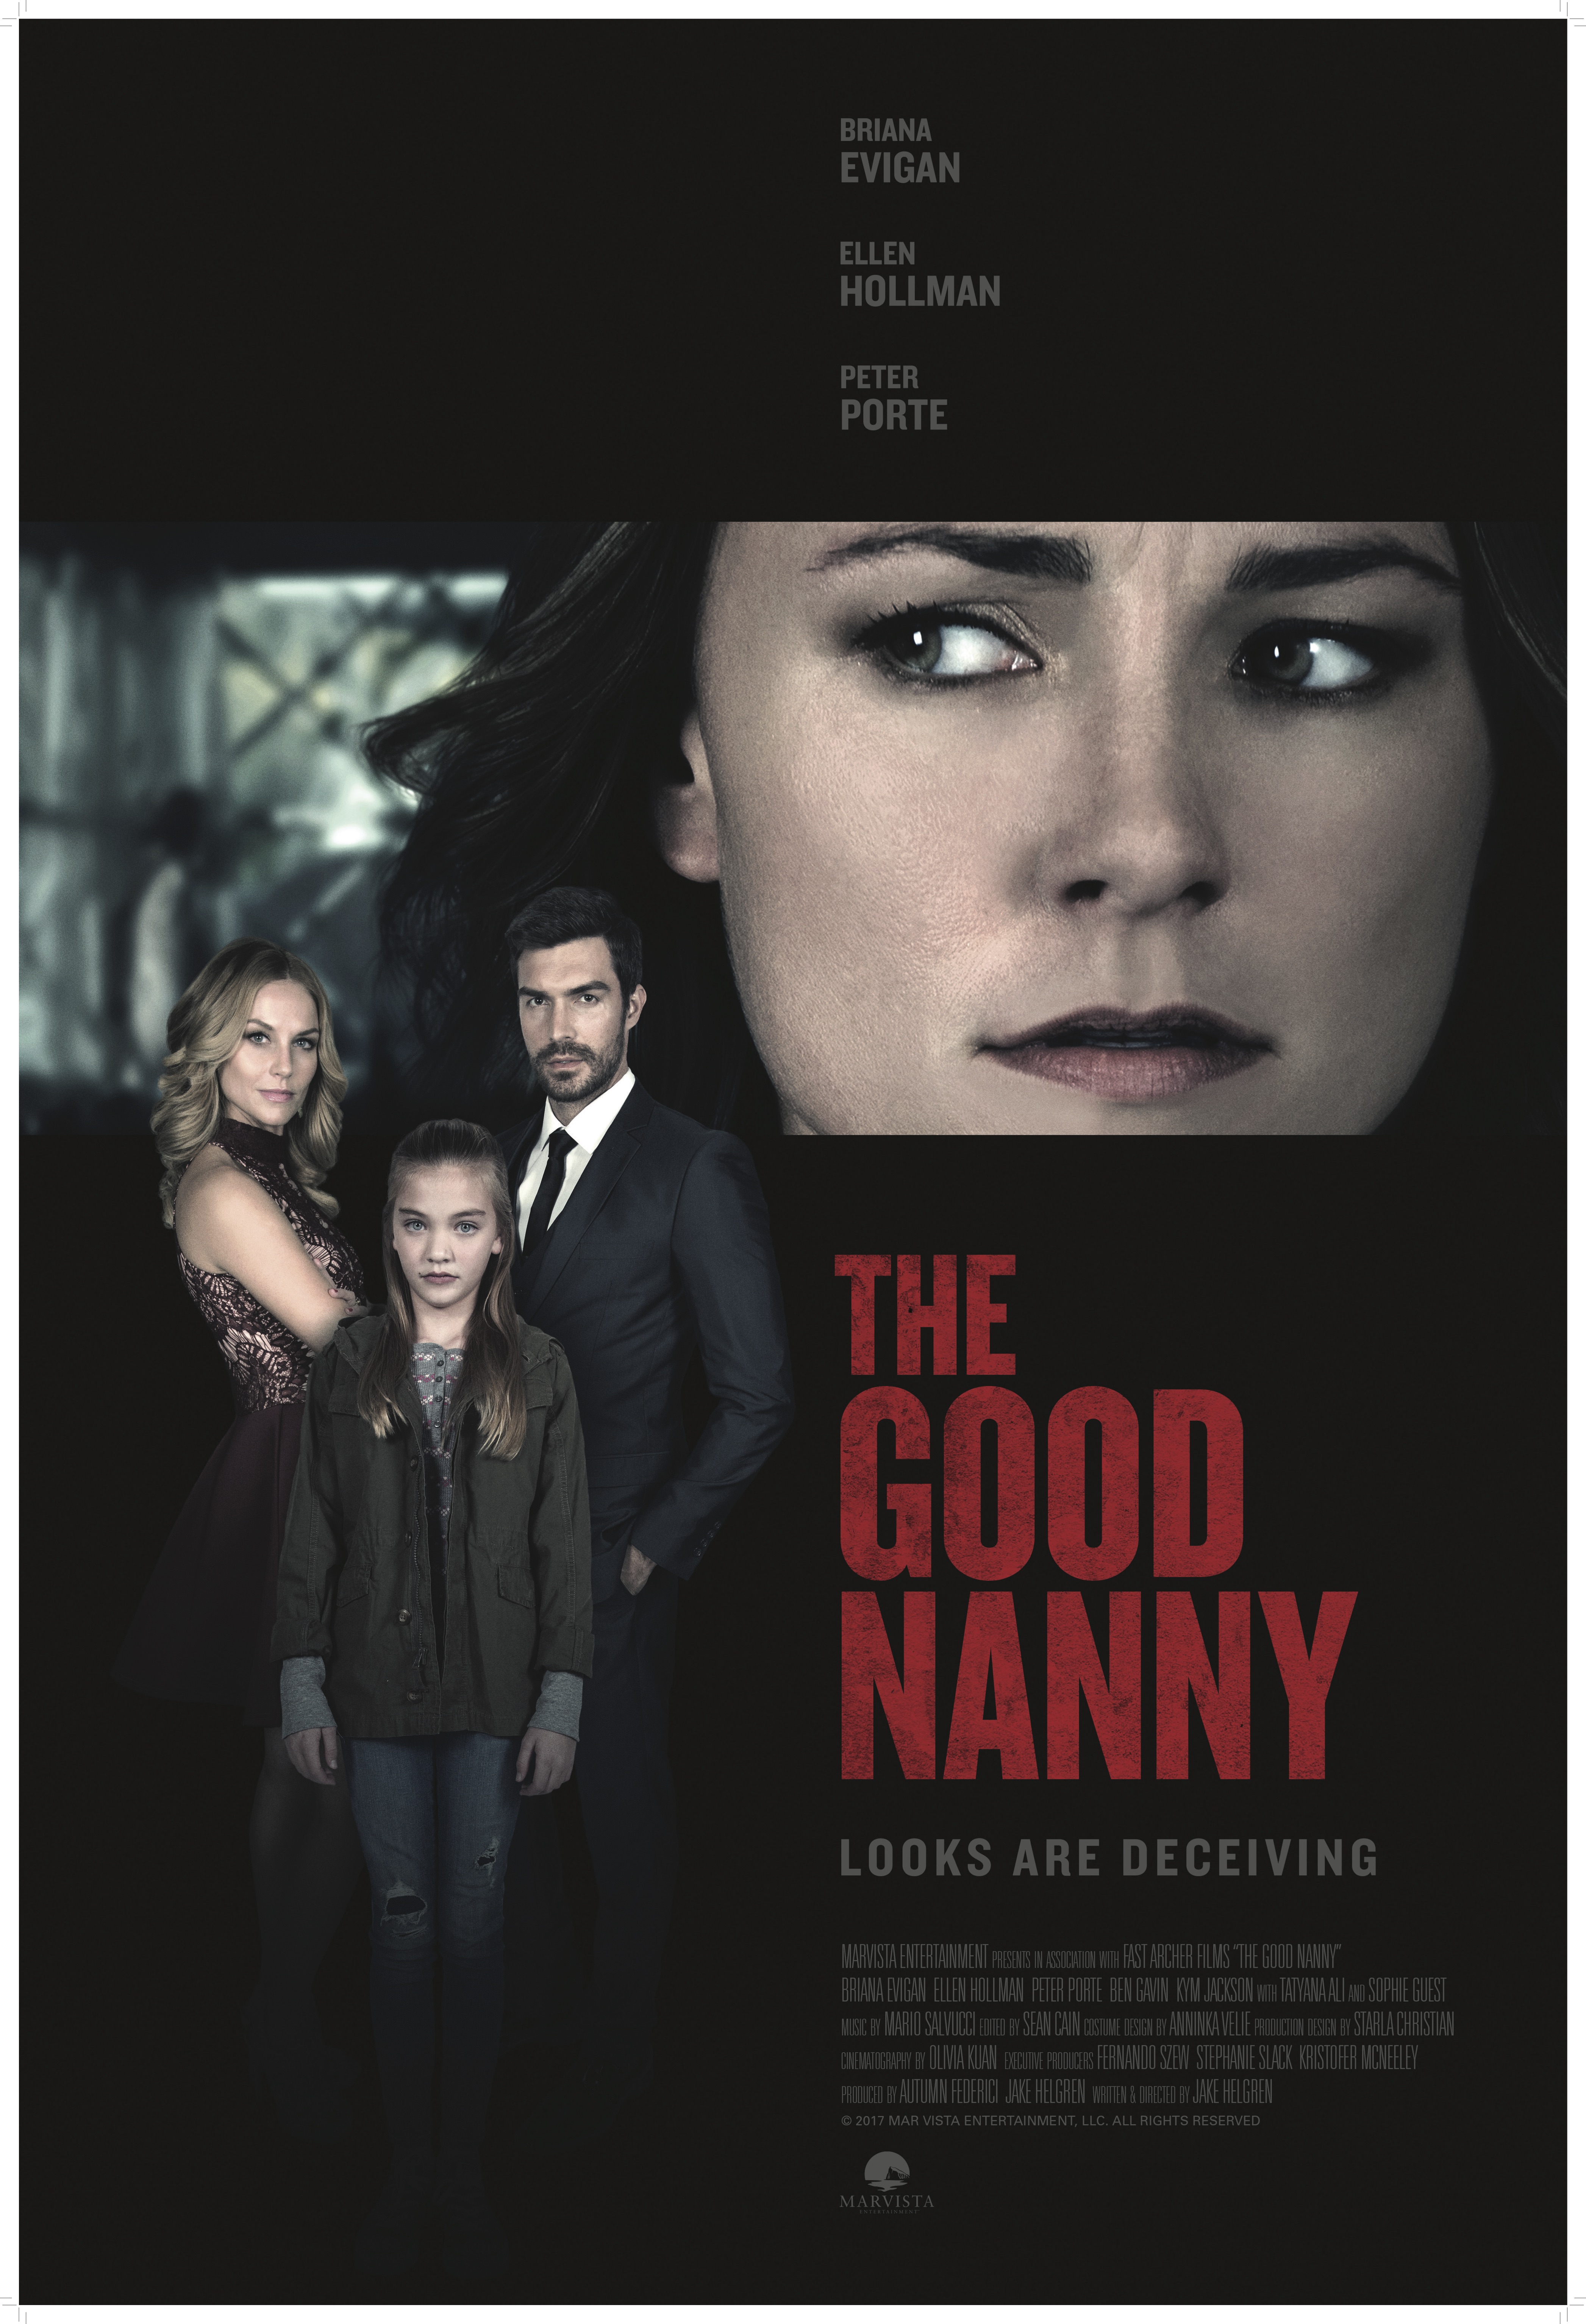 The Good Nanny (2017) starring Briana Evigan on DVD on DVD